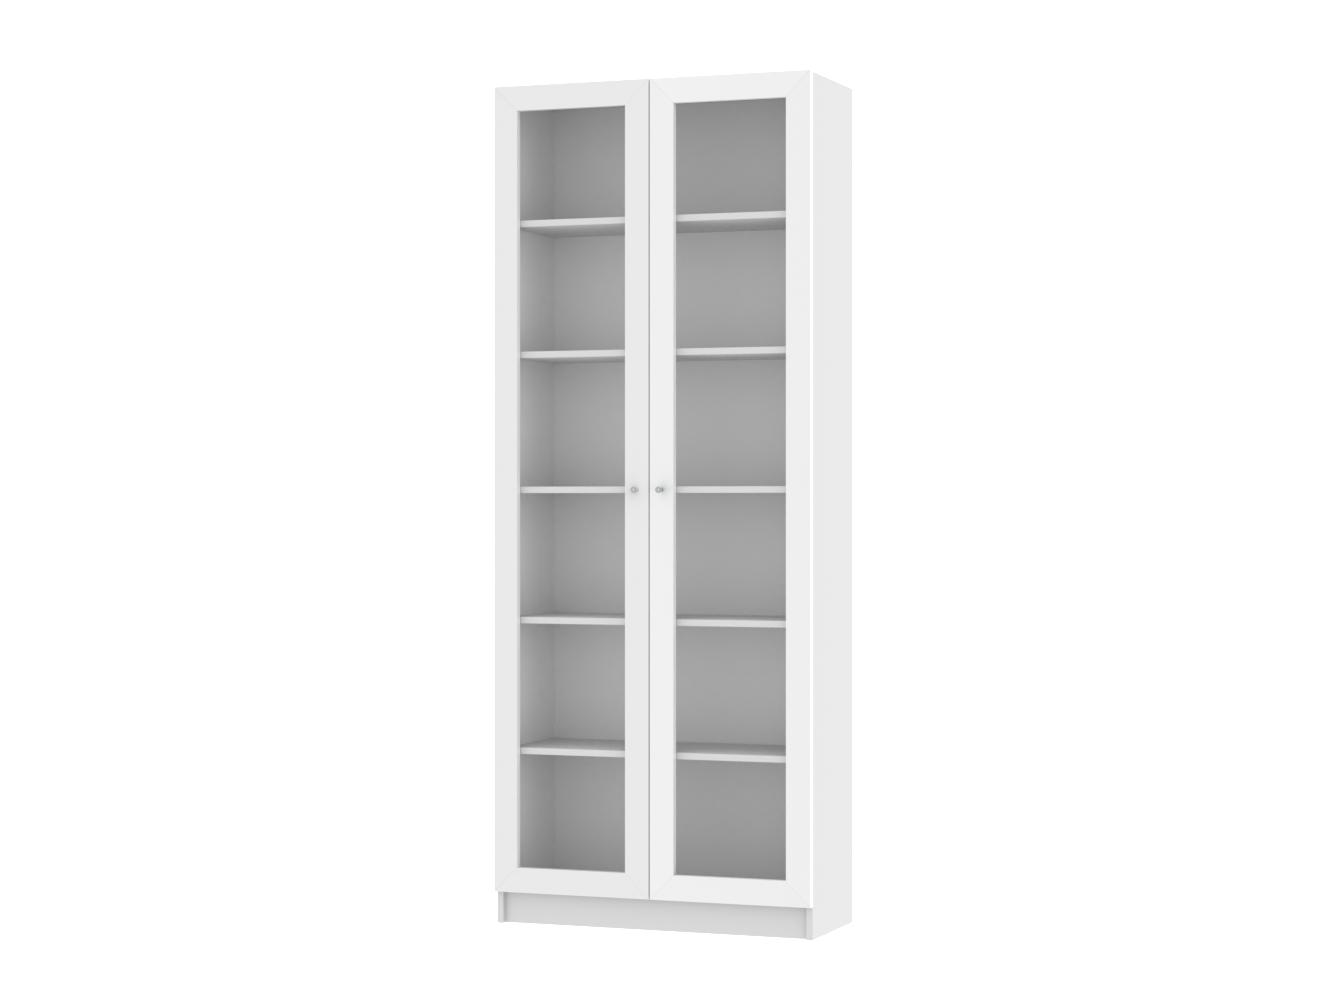  Книжный шкаф Билли 20 white ИКЕА (IKEA) изображение товара